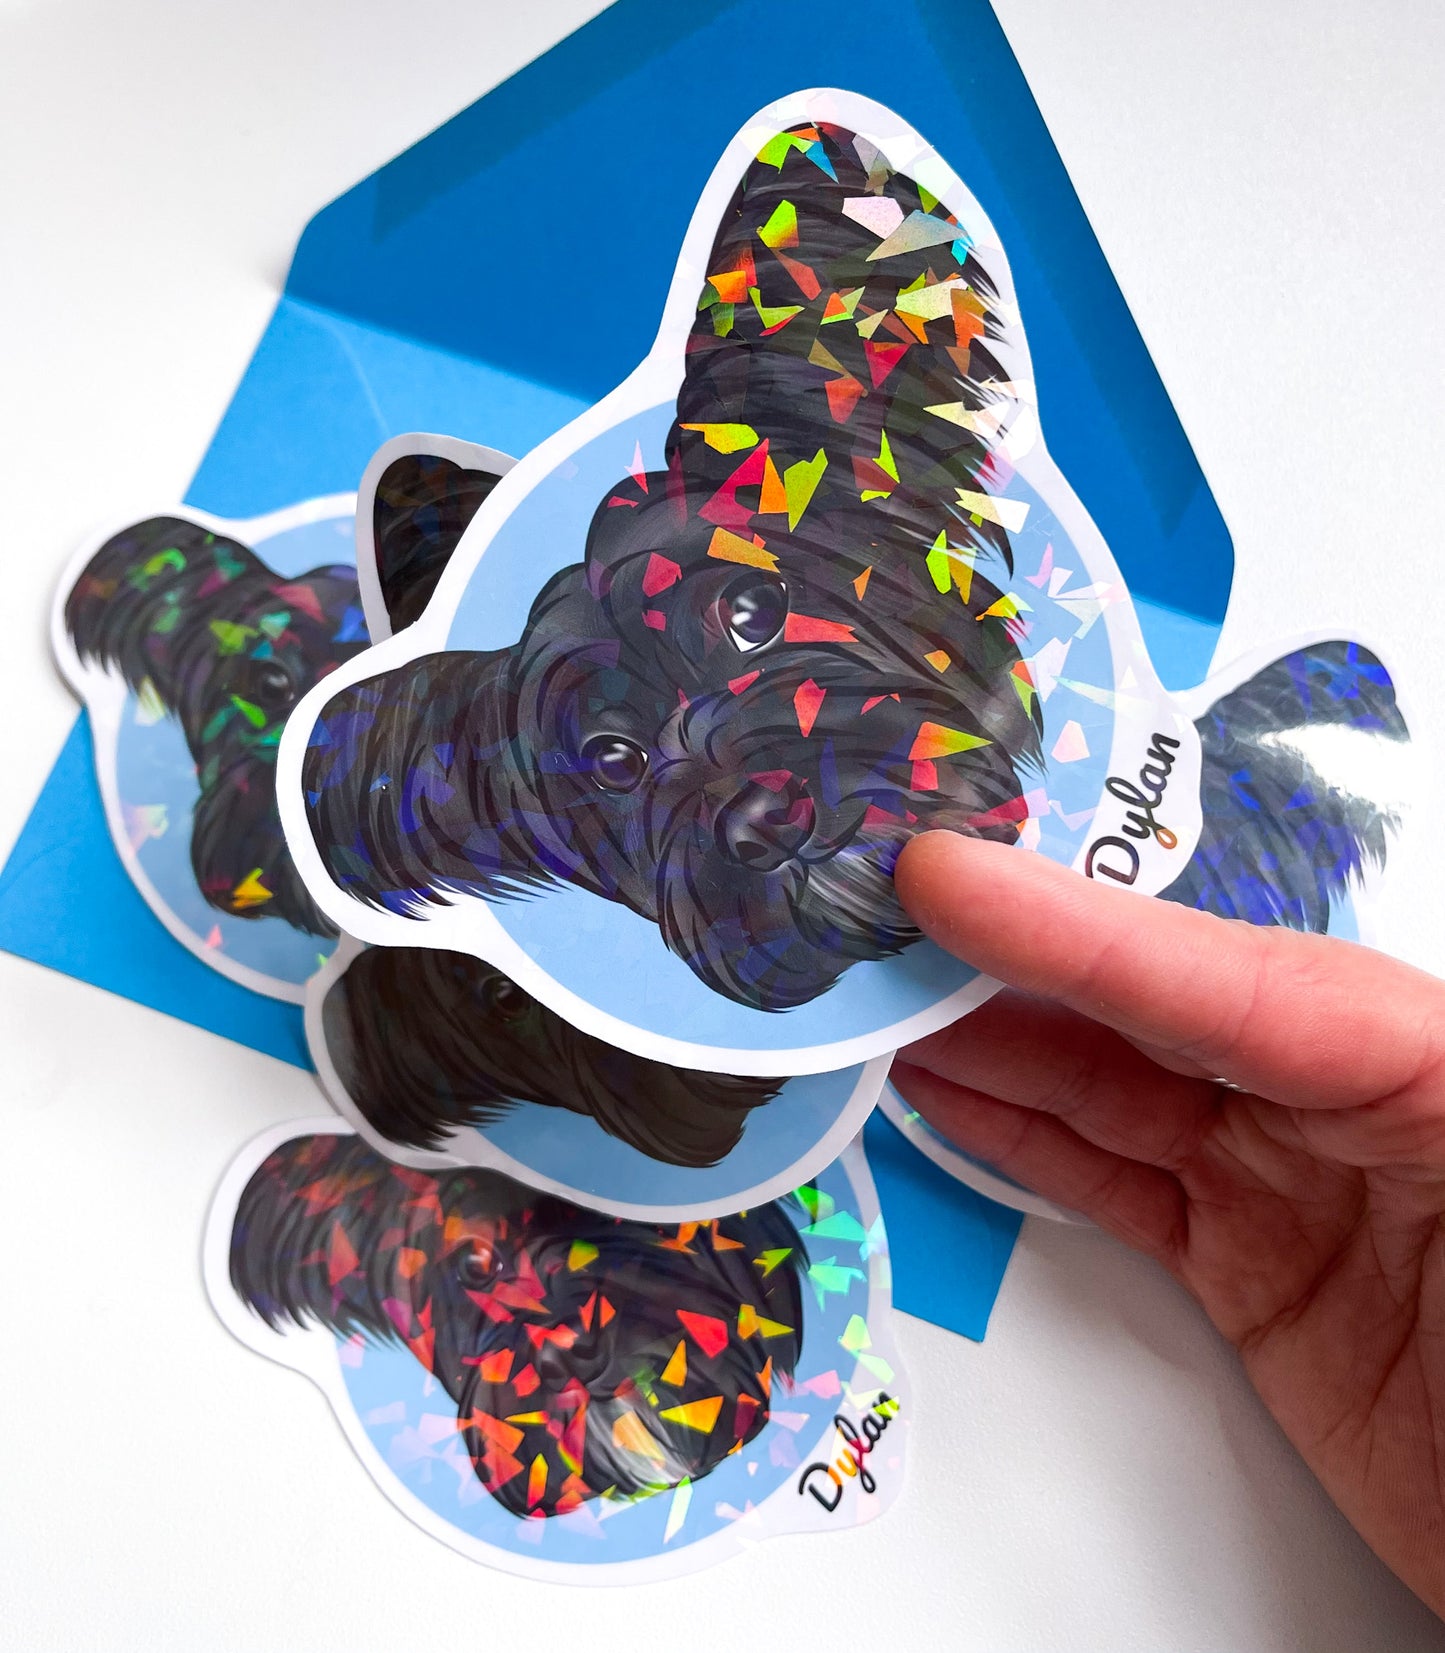 Holographic Stickers (4 x Medium)